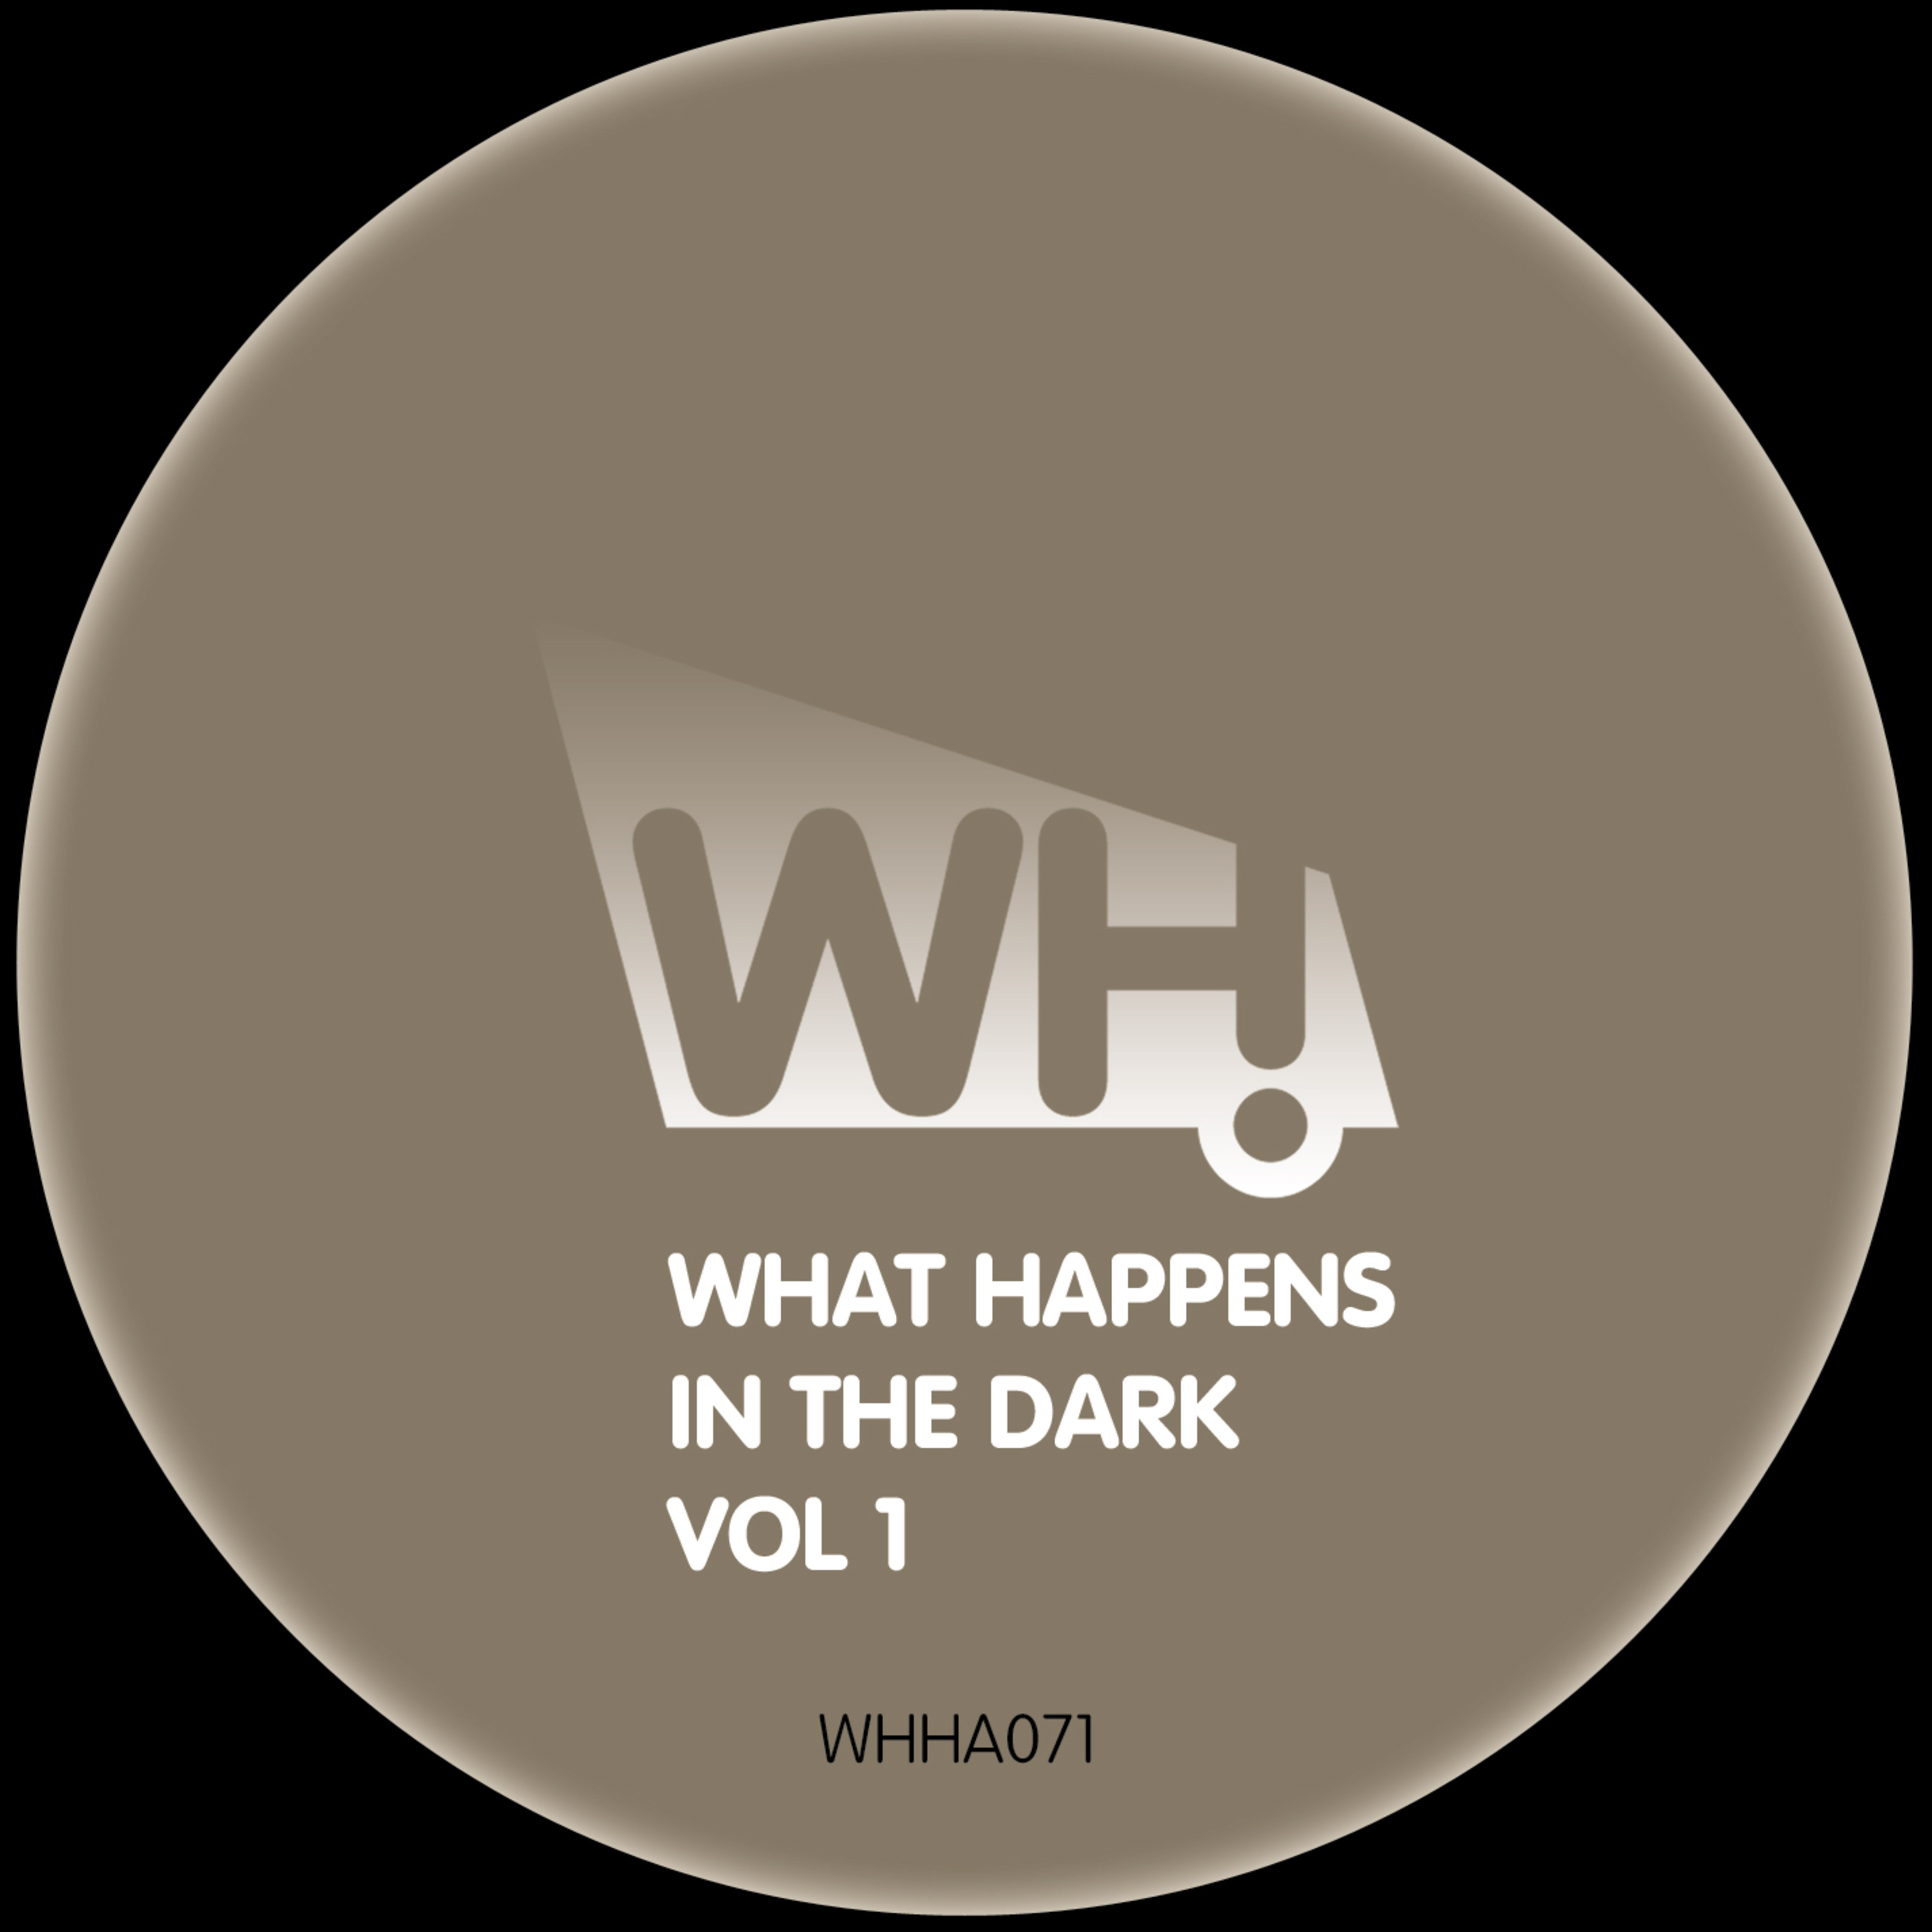 What Happens in the Dark Vol 1